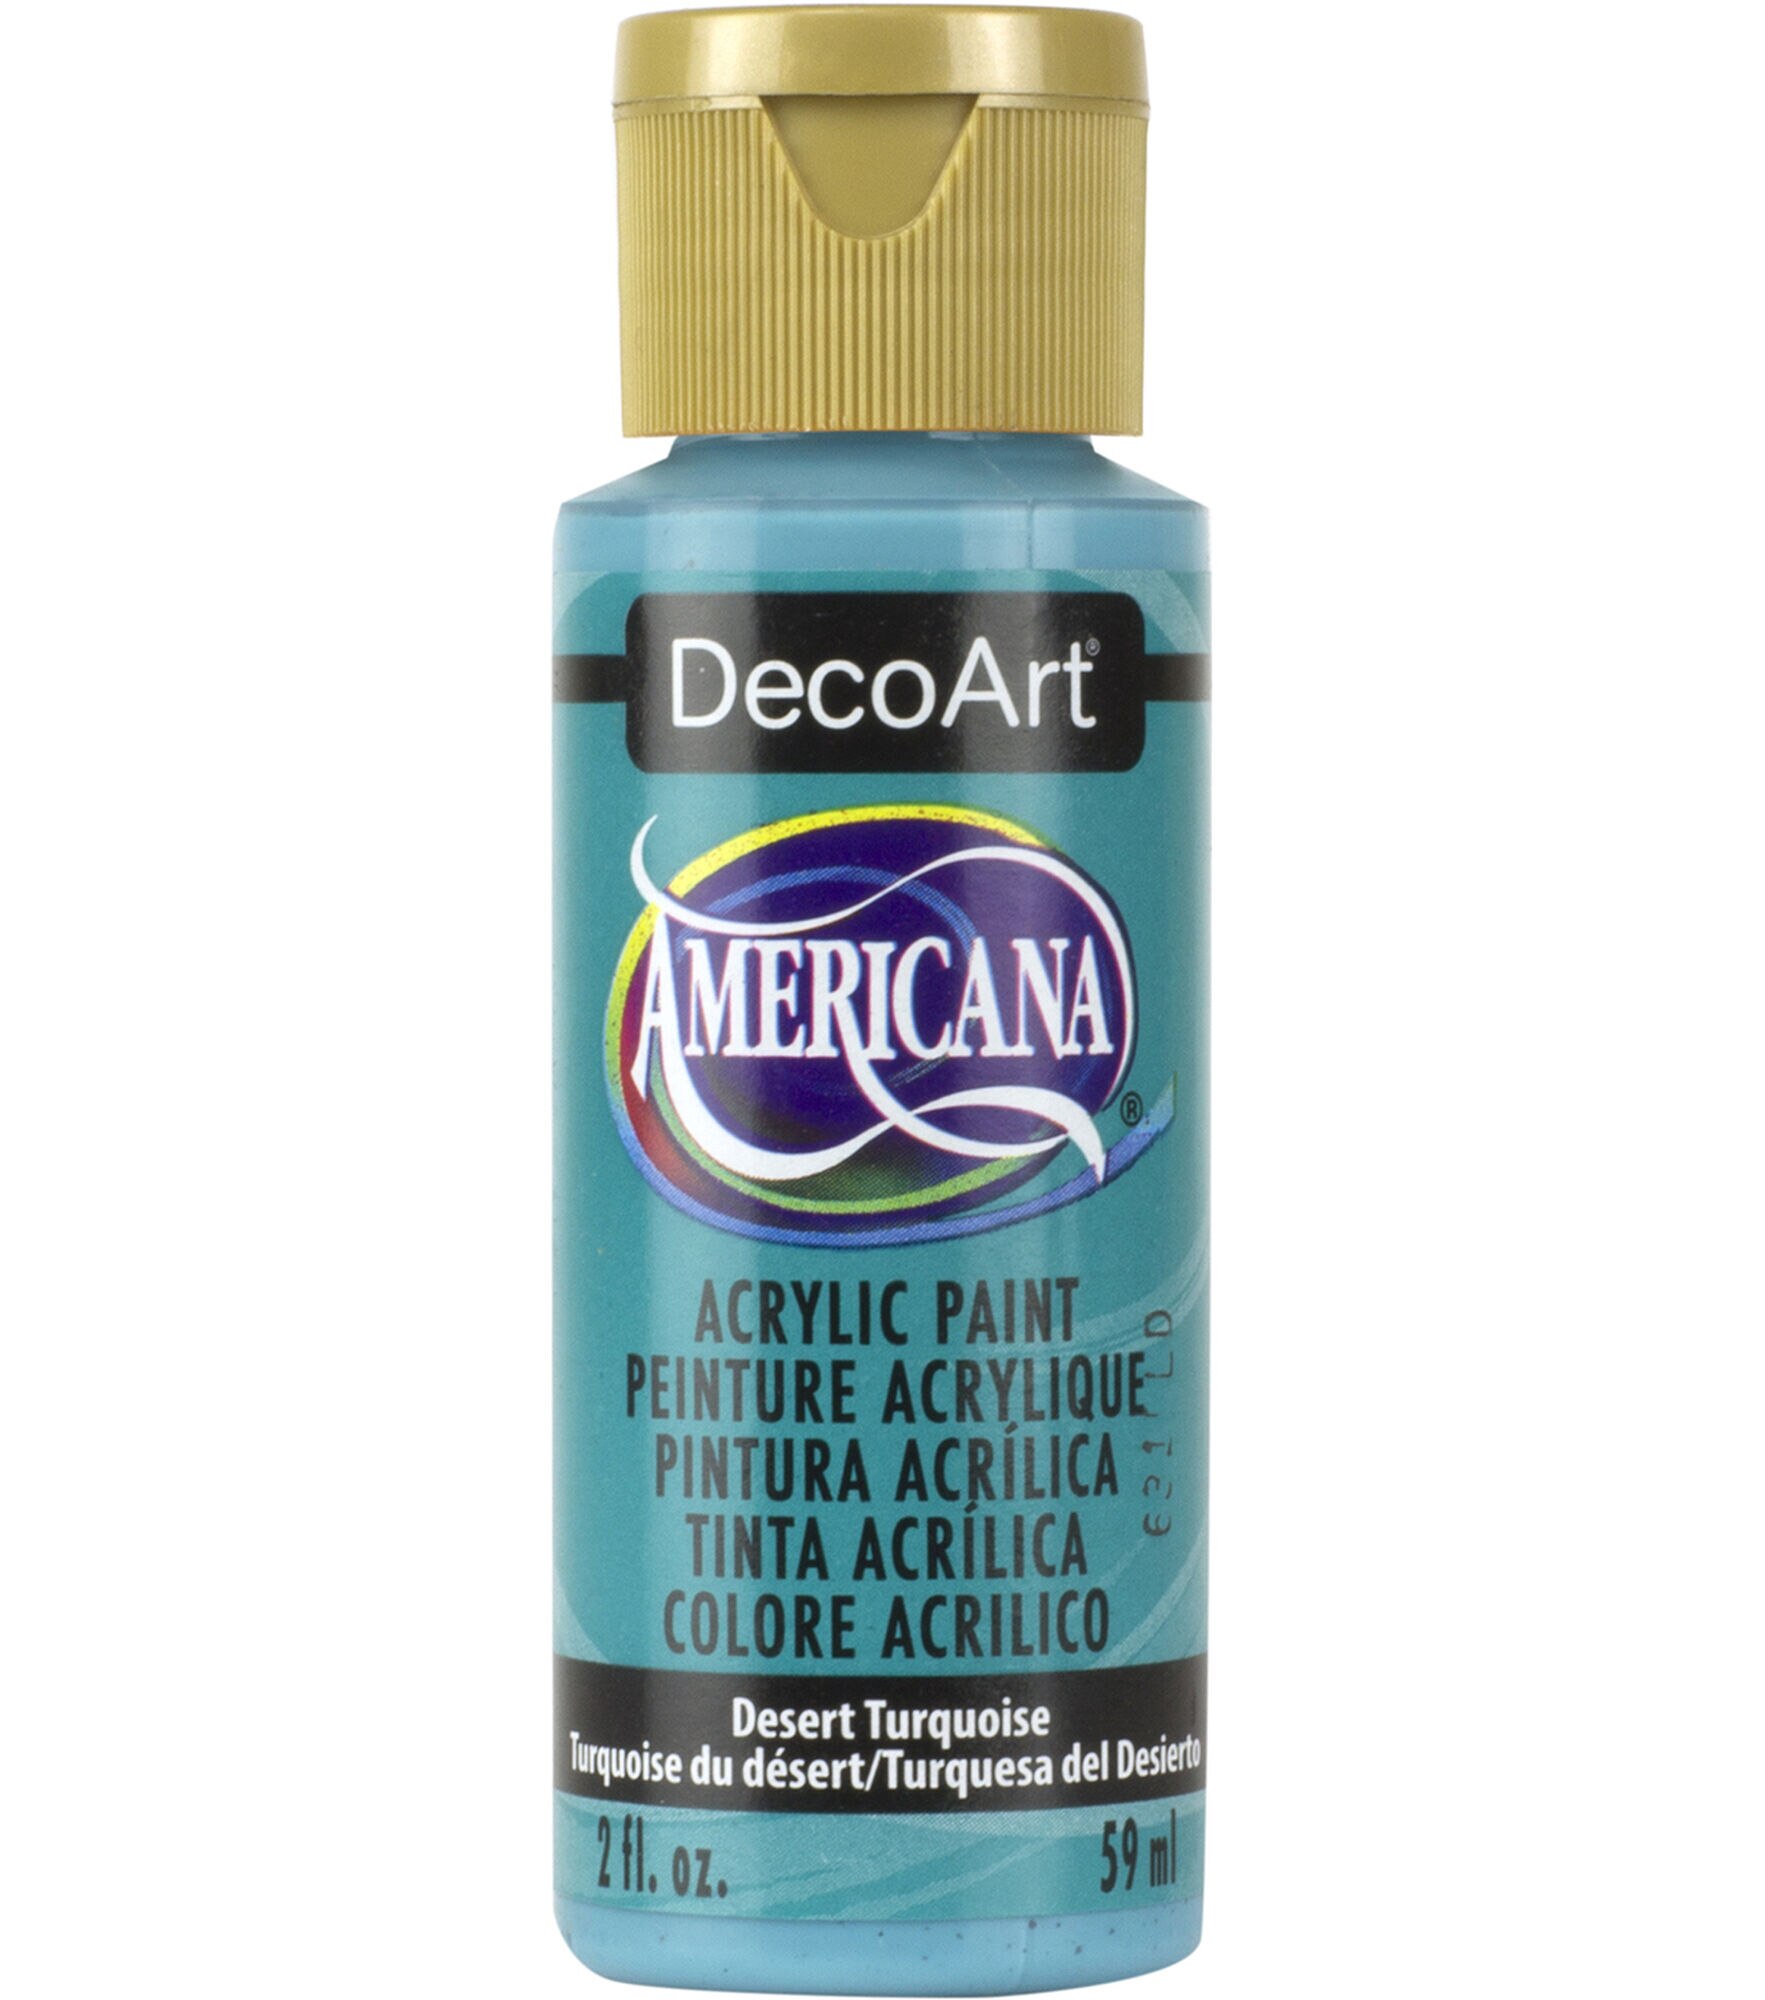 DecoArt Americana Acrylic 2oz Paint, Desert Turquoise, hi-res